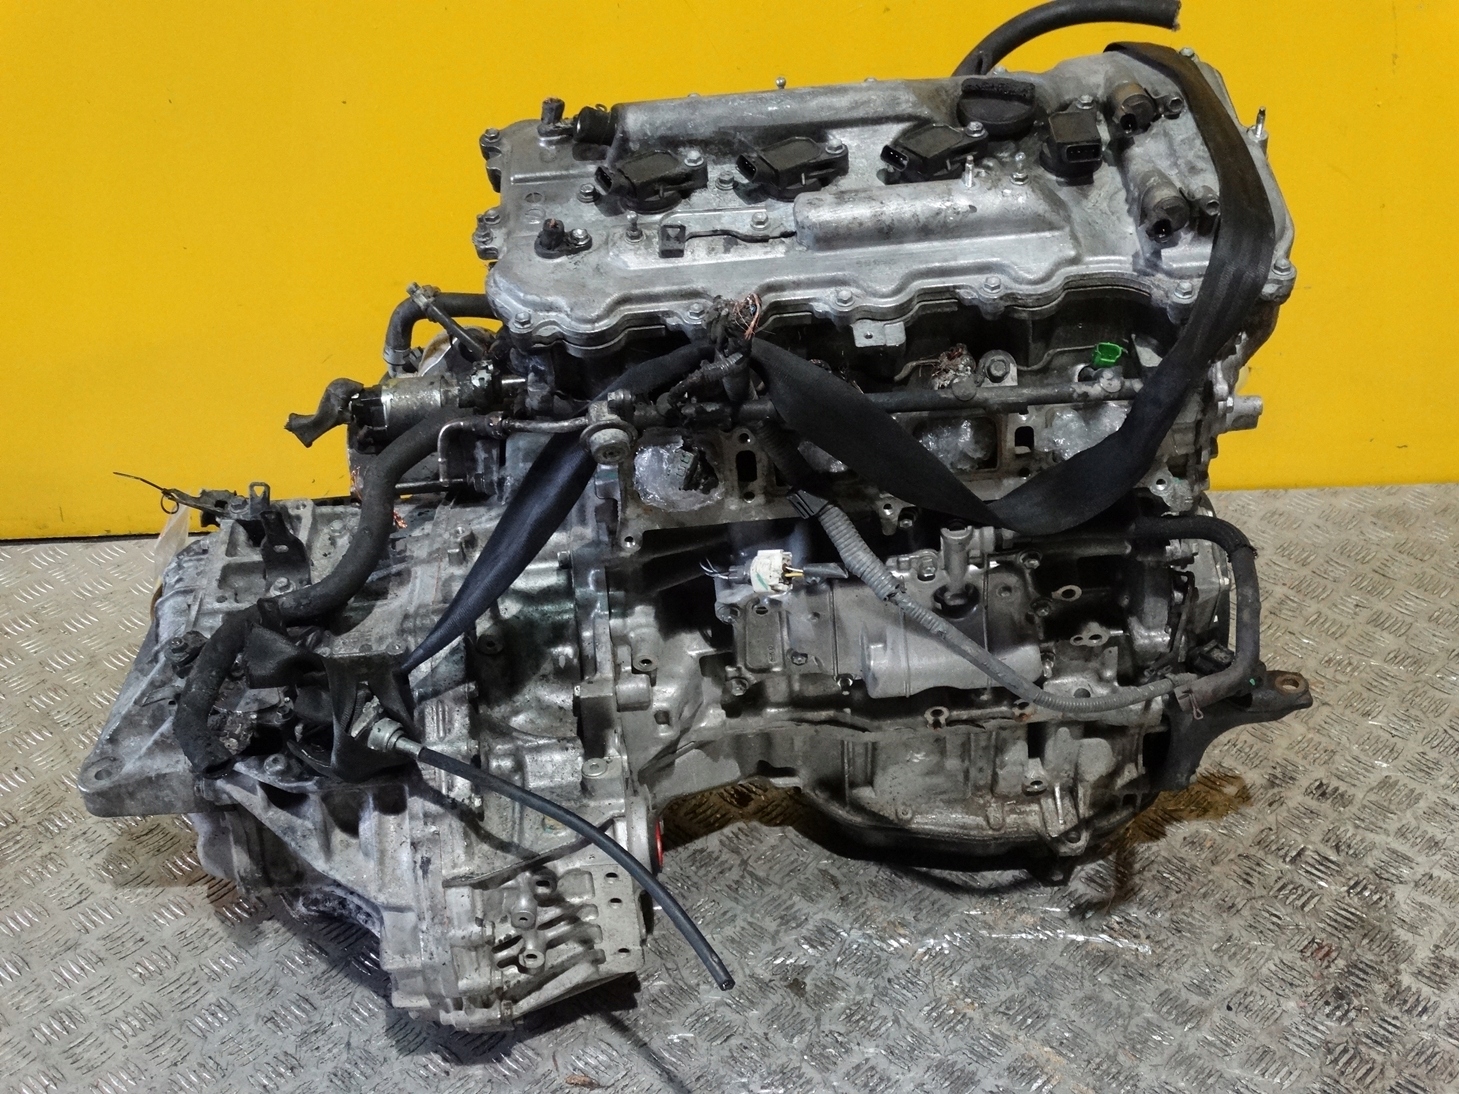 Toyota Camry 2.5 (09.2012 - 08.2013) - технические характеристики